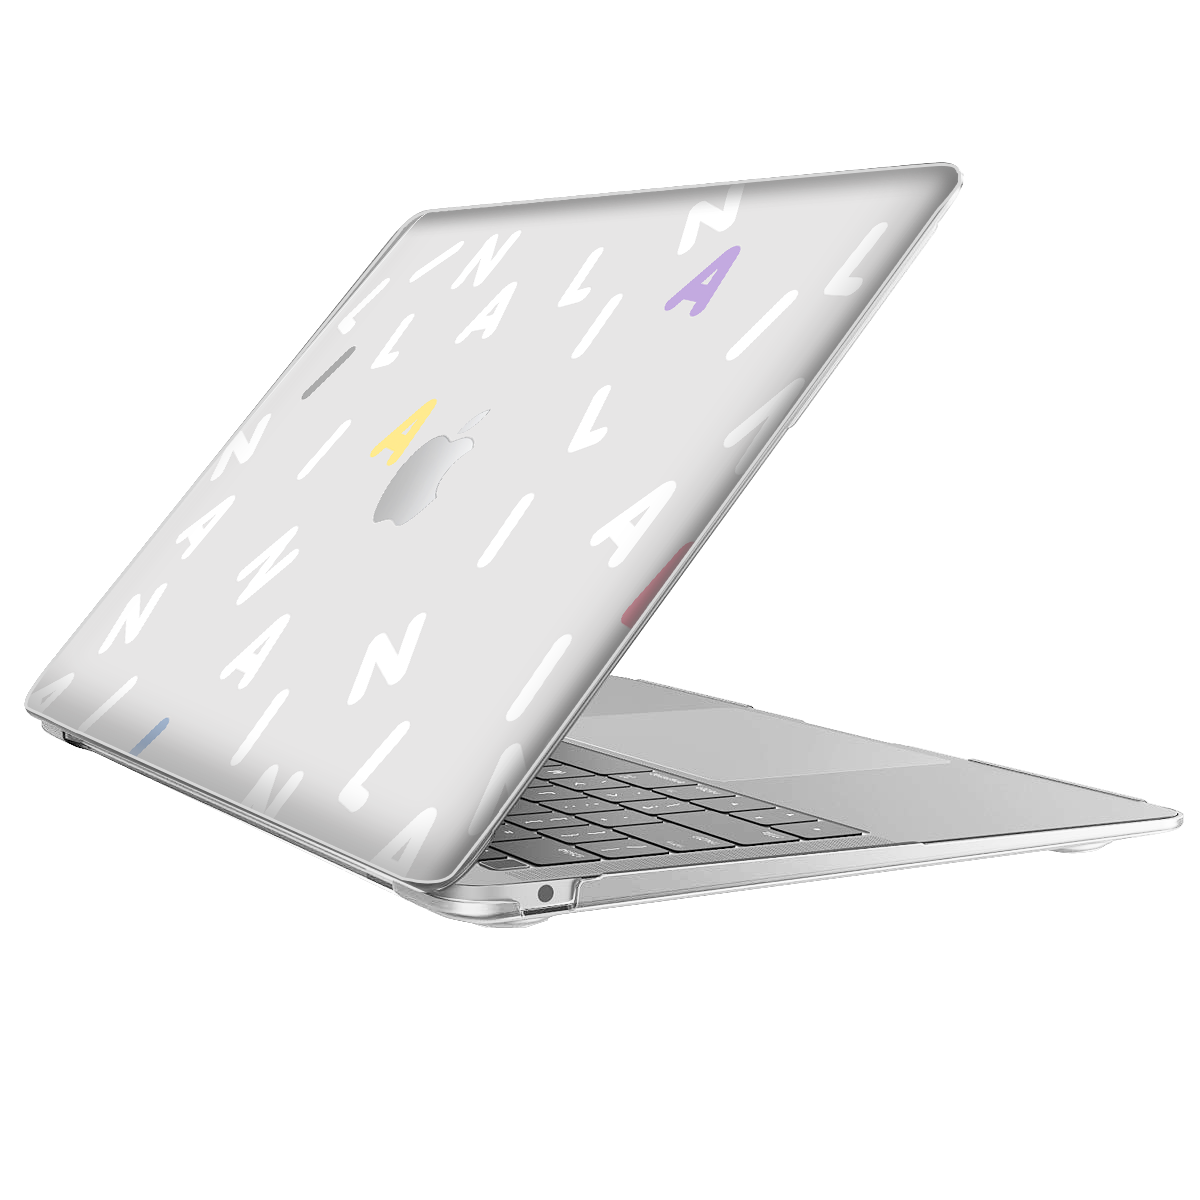 Macbook Snap Case - CUSTOM MONOGRAM 2.0 White